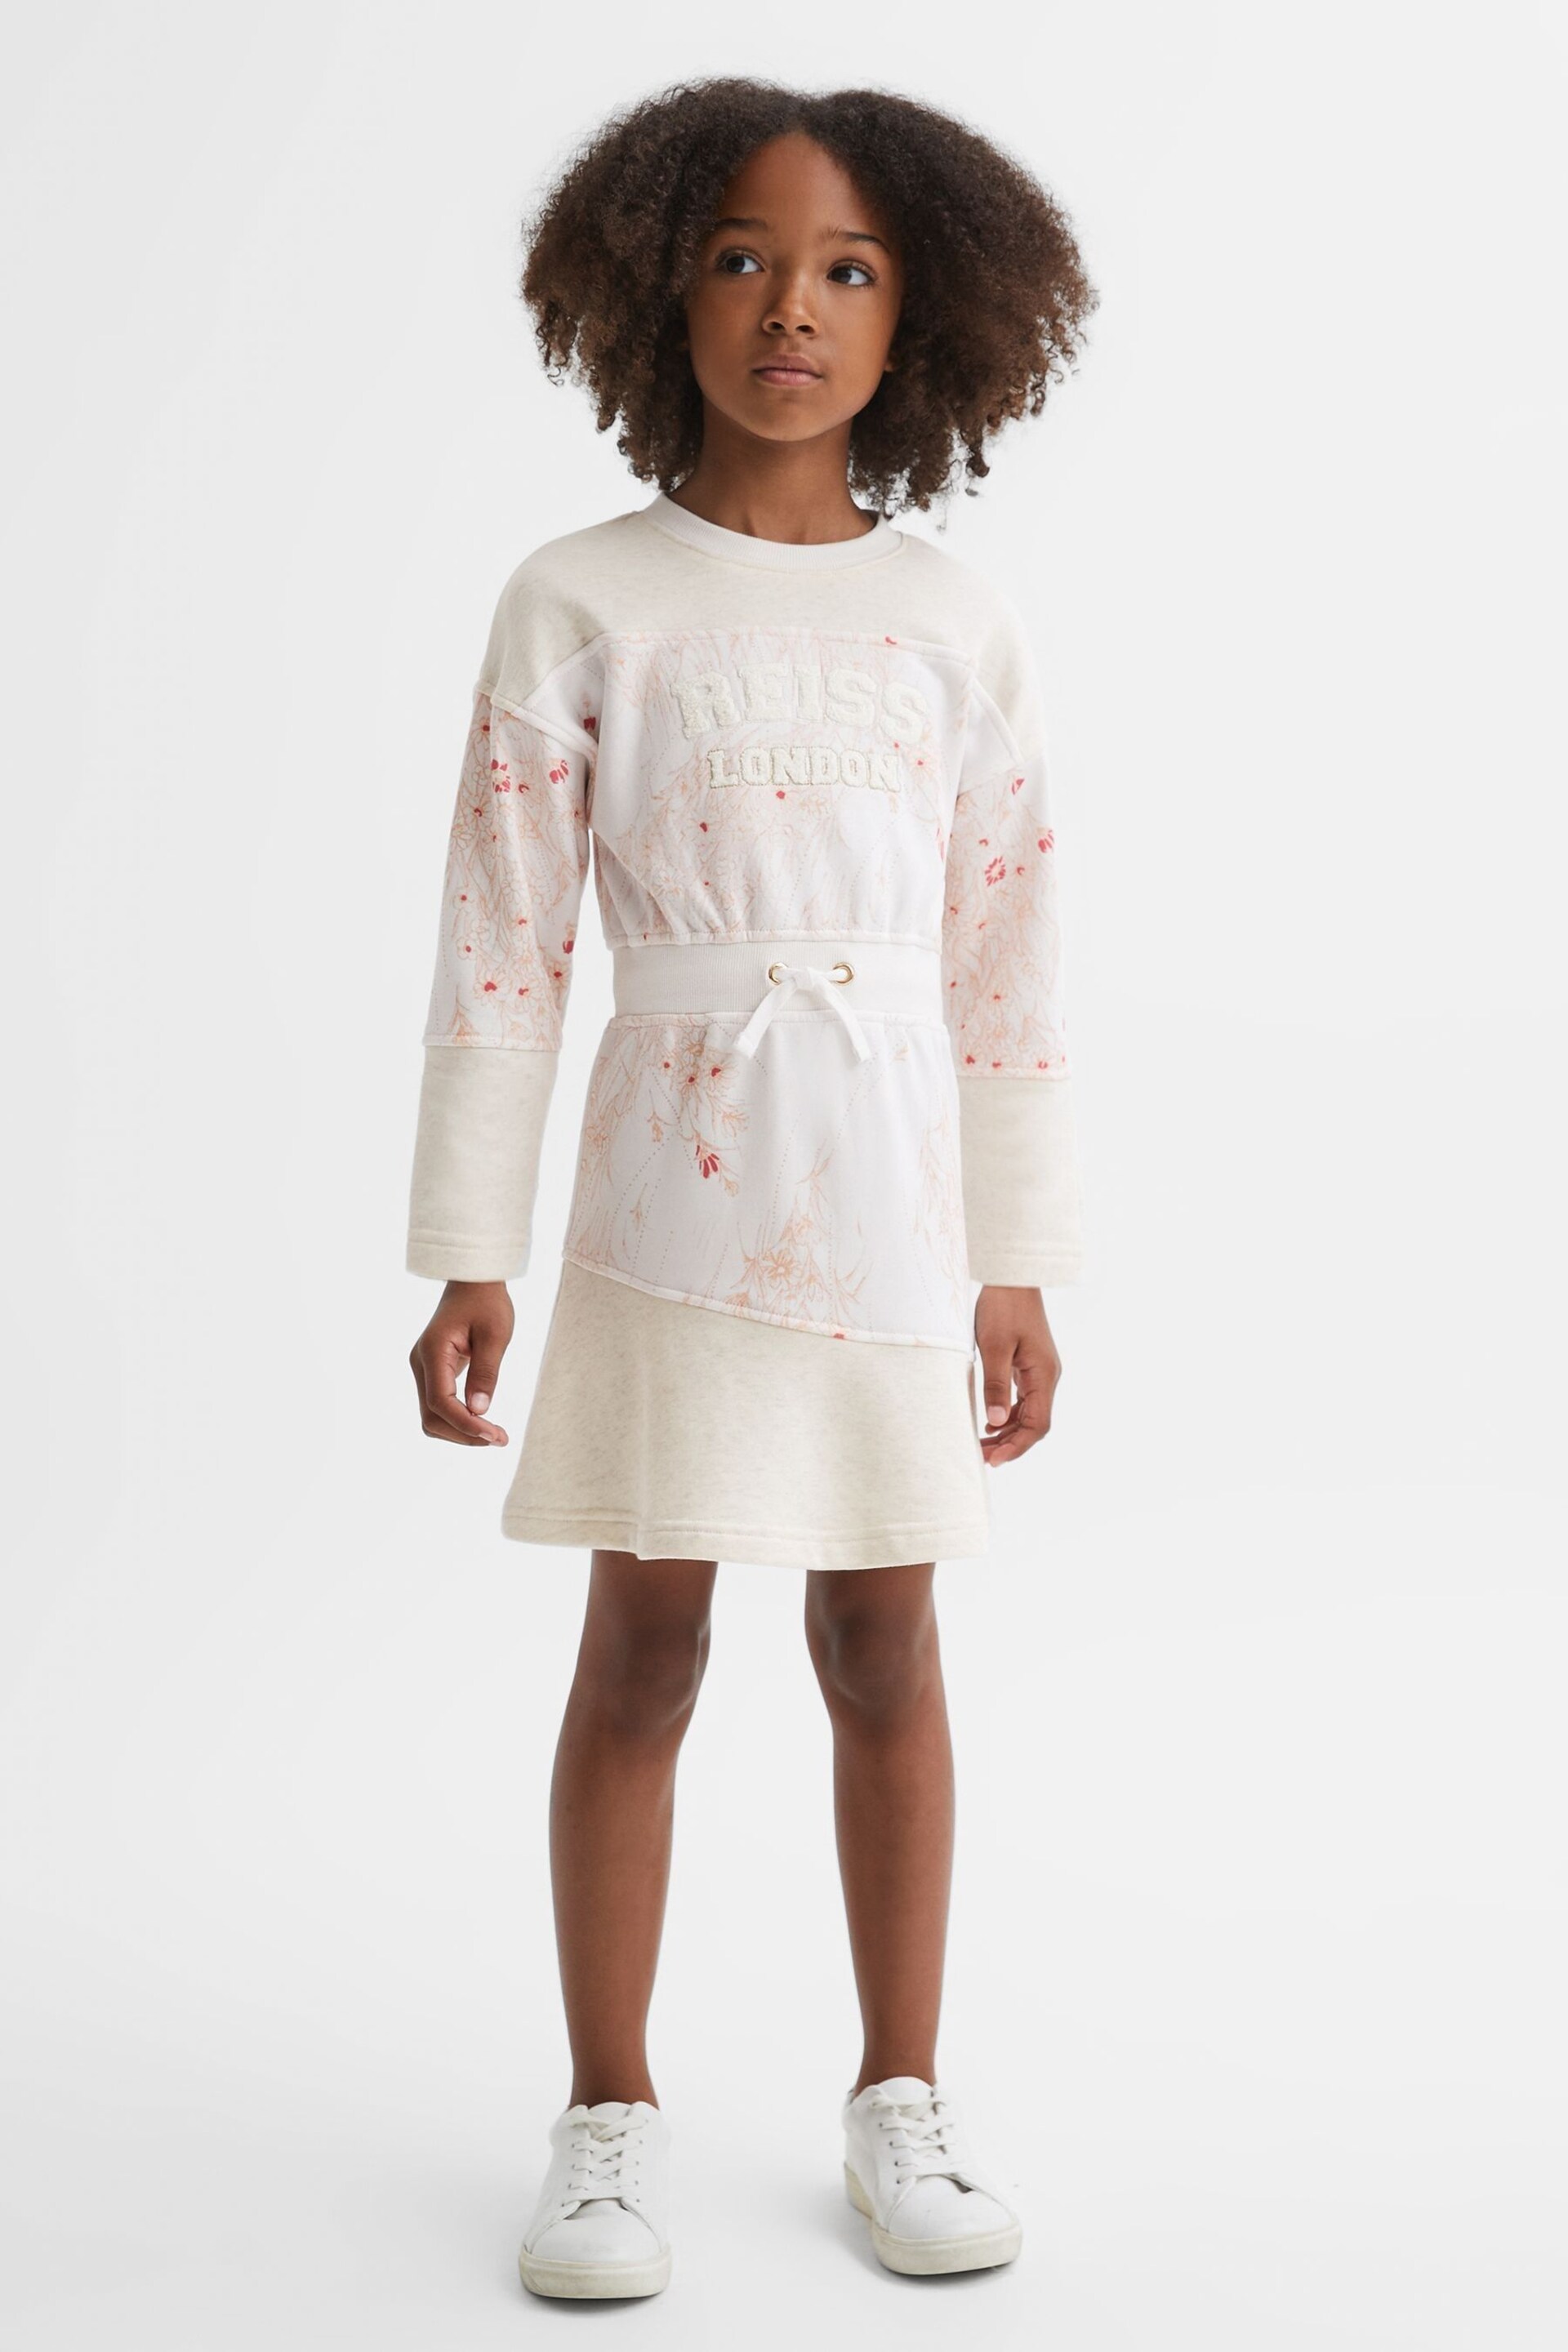 Reiss Pink Kendrix Teen Cotton Blend Drawstring Dress - Image 1 of 7